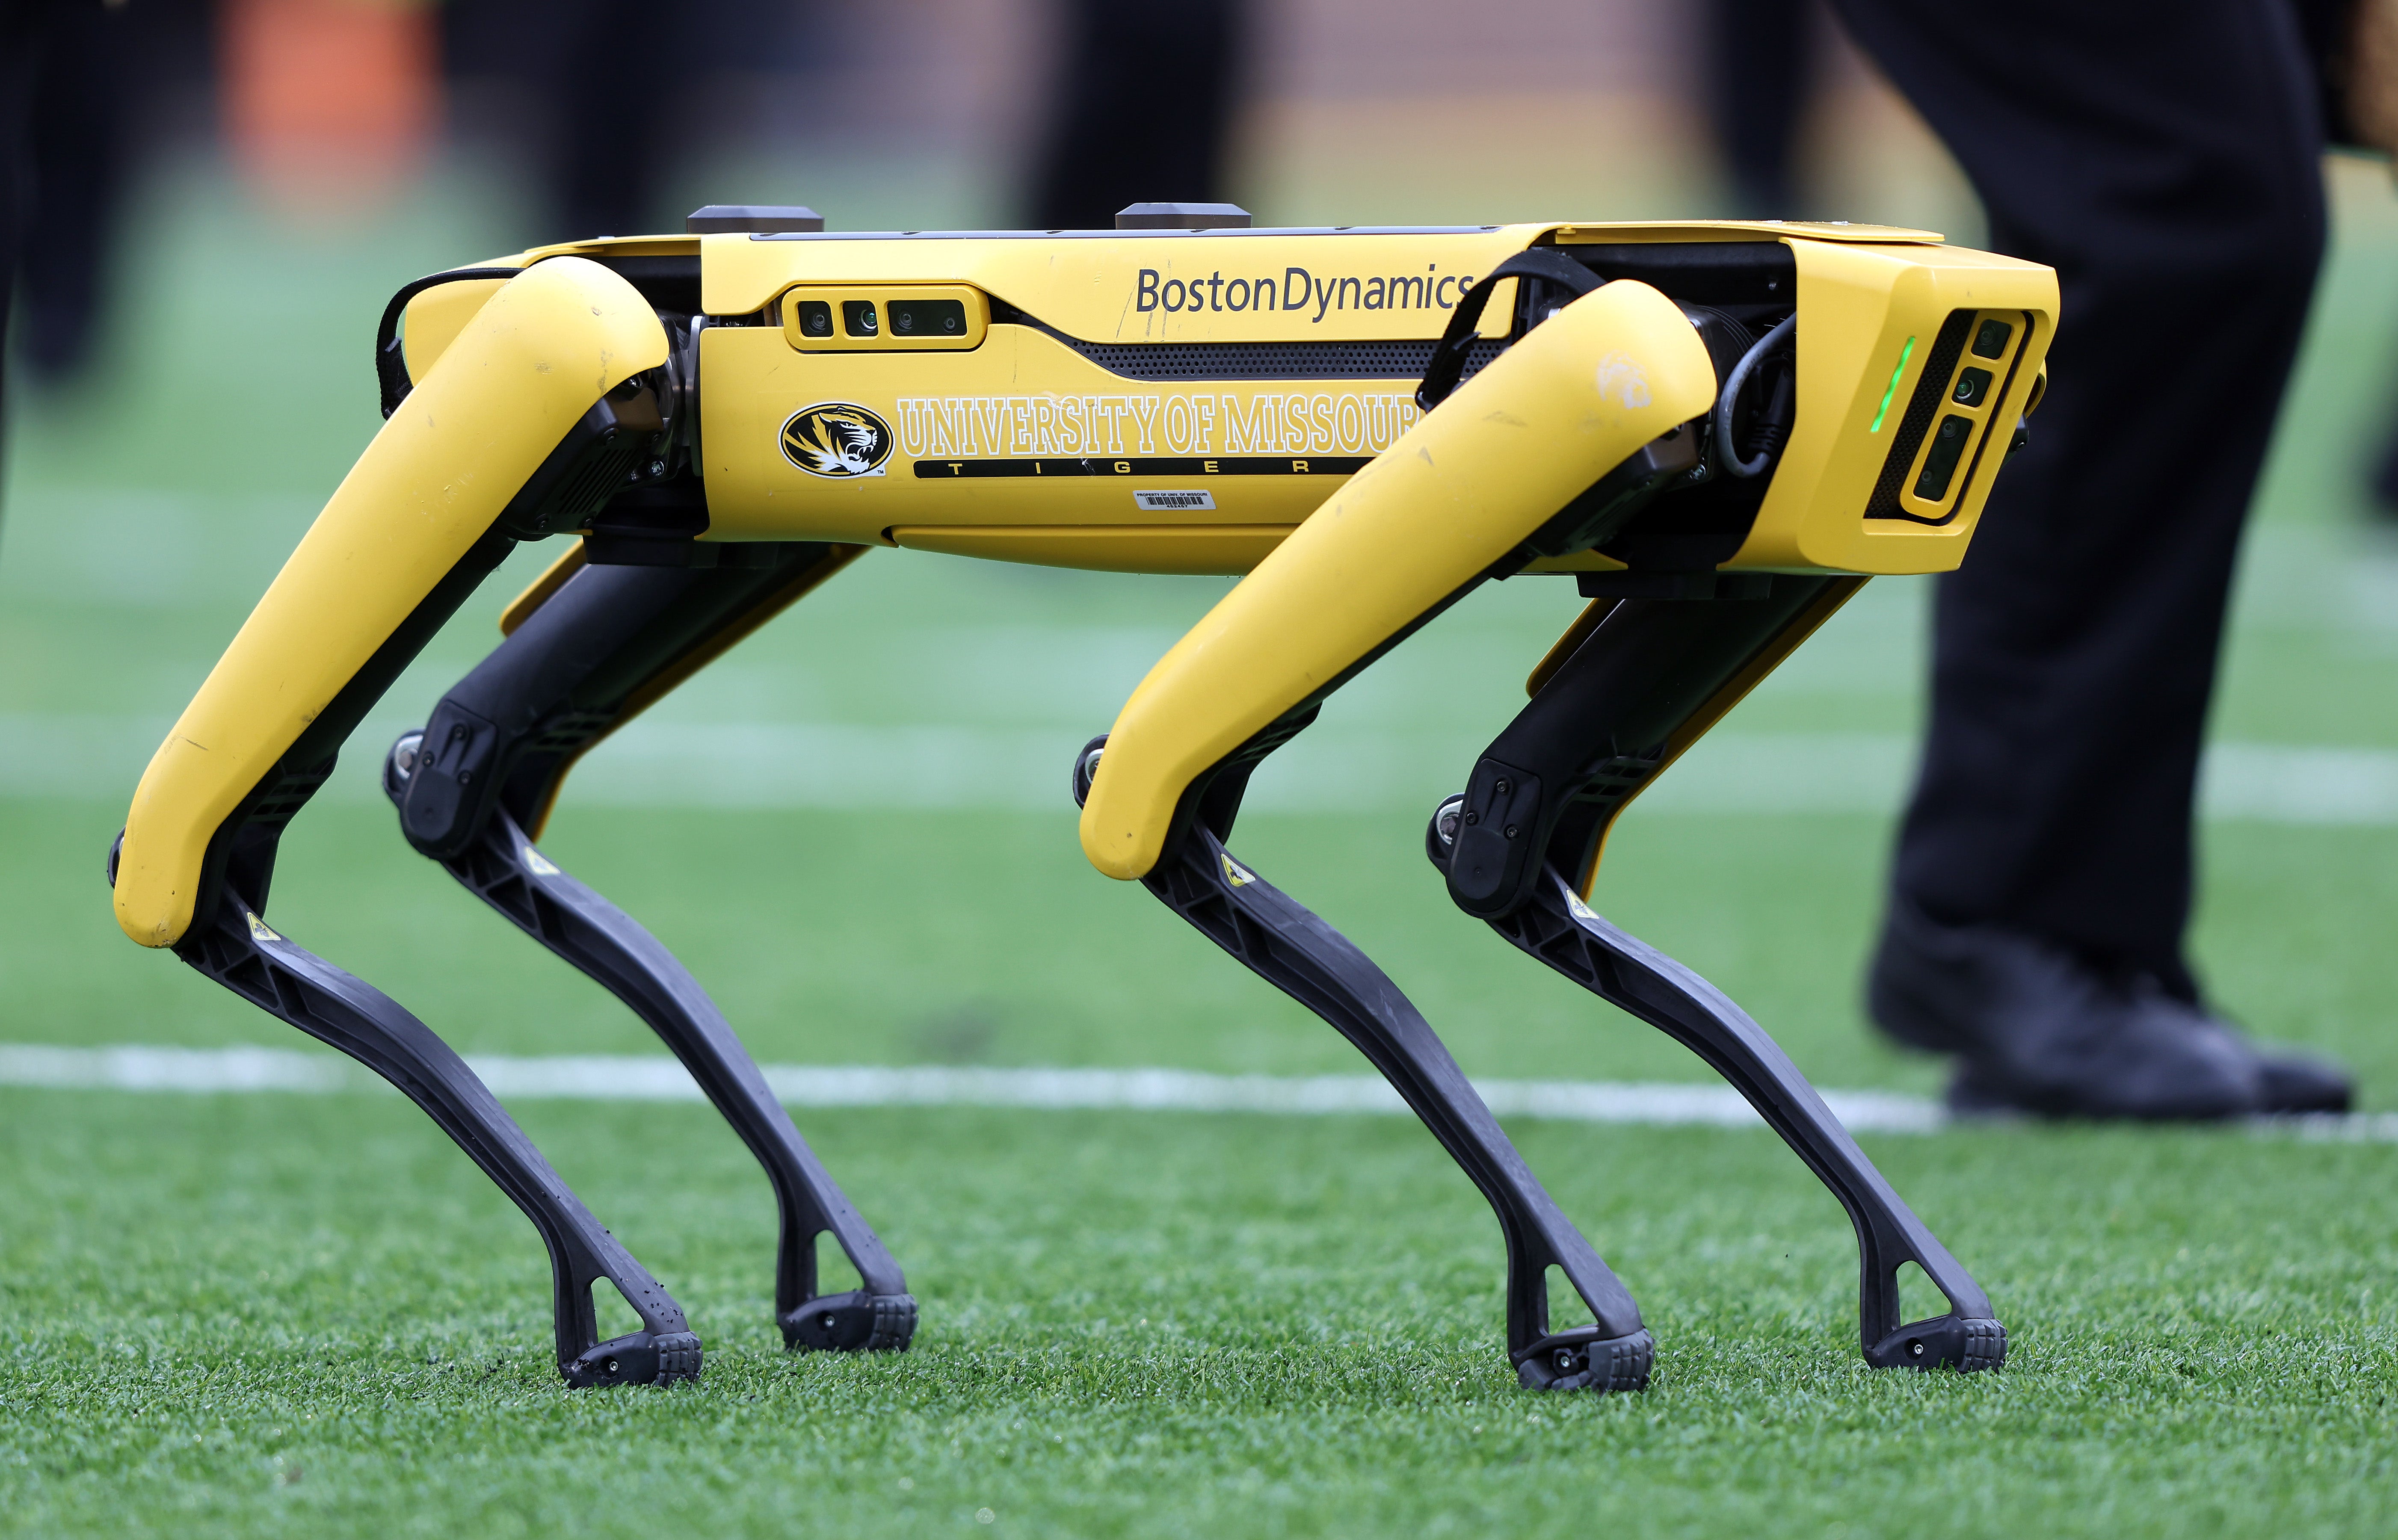 Spot, a four-legged dog-like robot made by Boston Dynamics